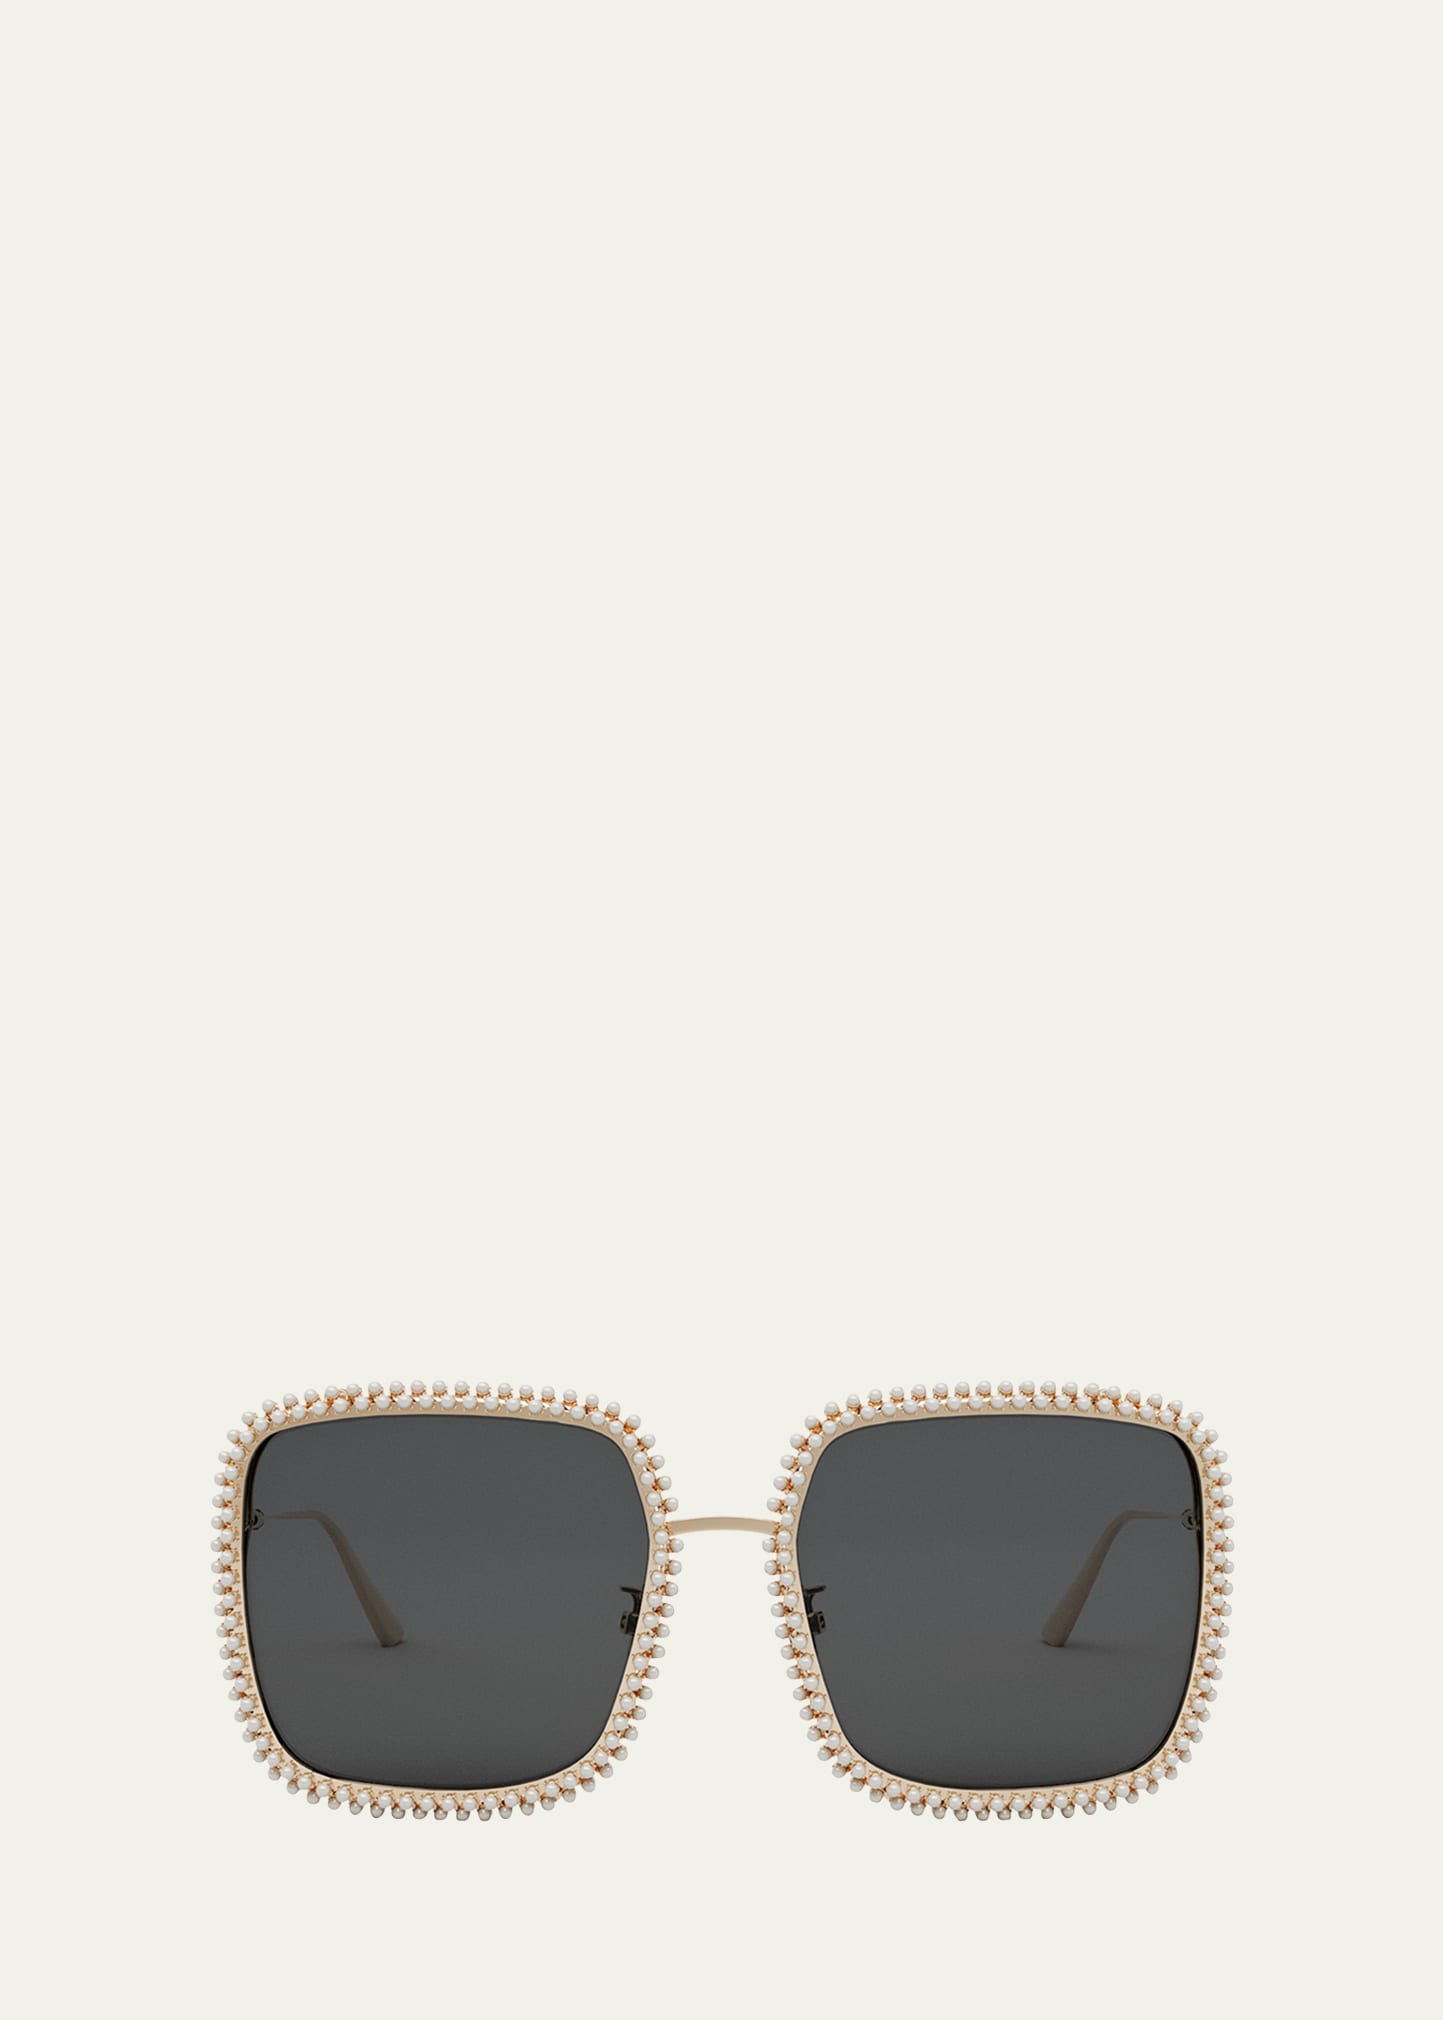 Dior S2u Square Sunglasses, 59mm In Sltnick/smk